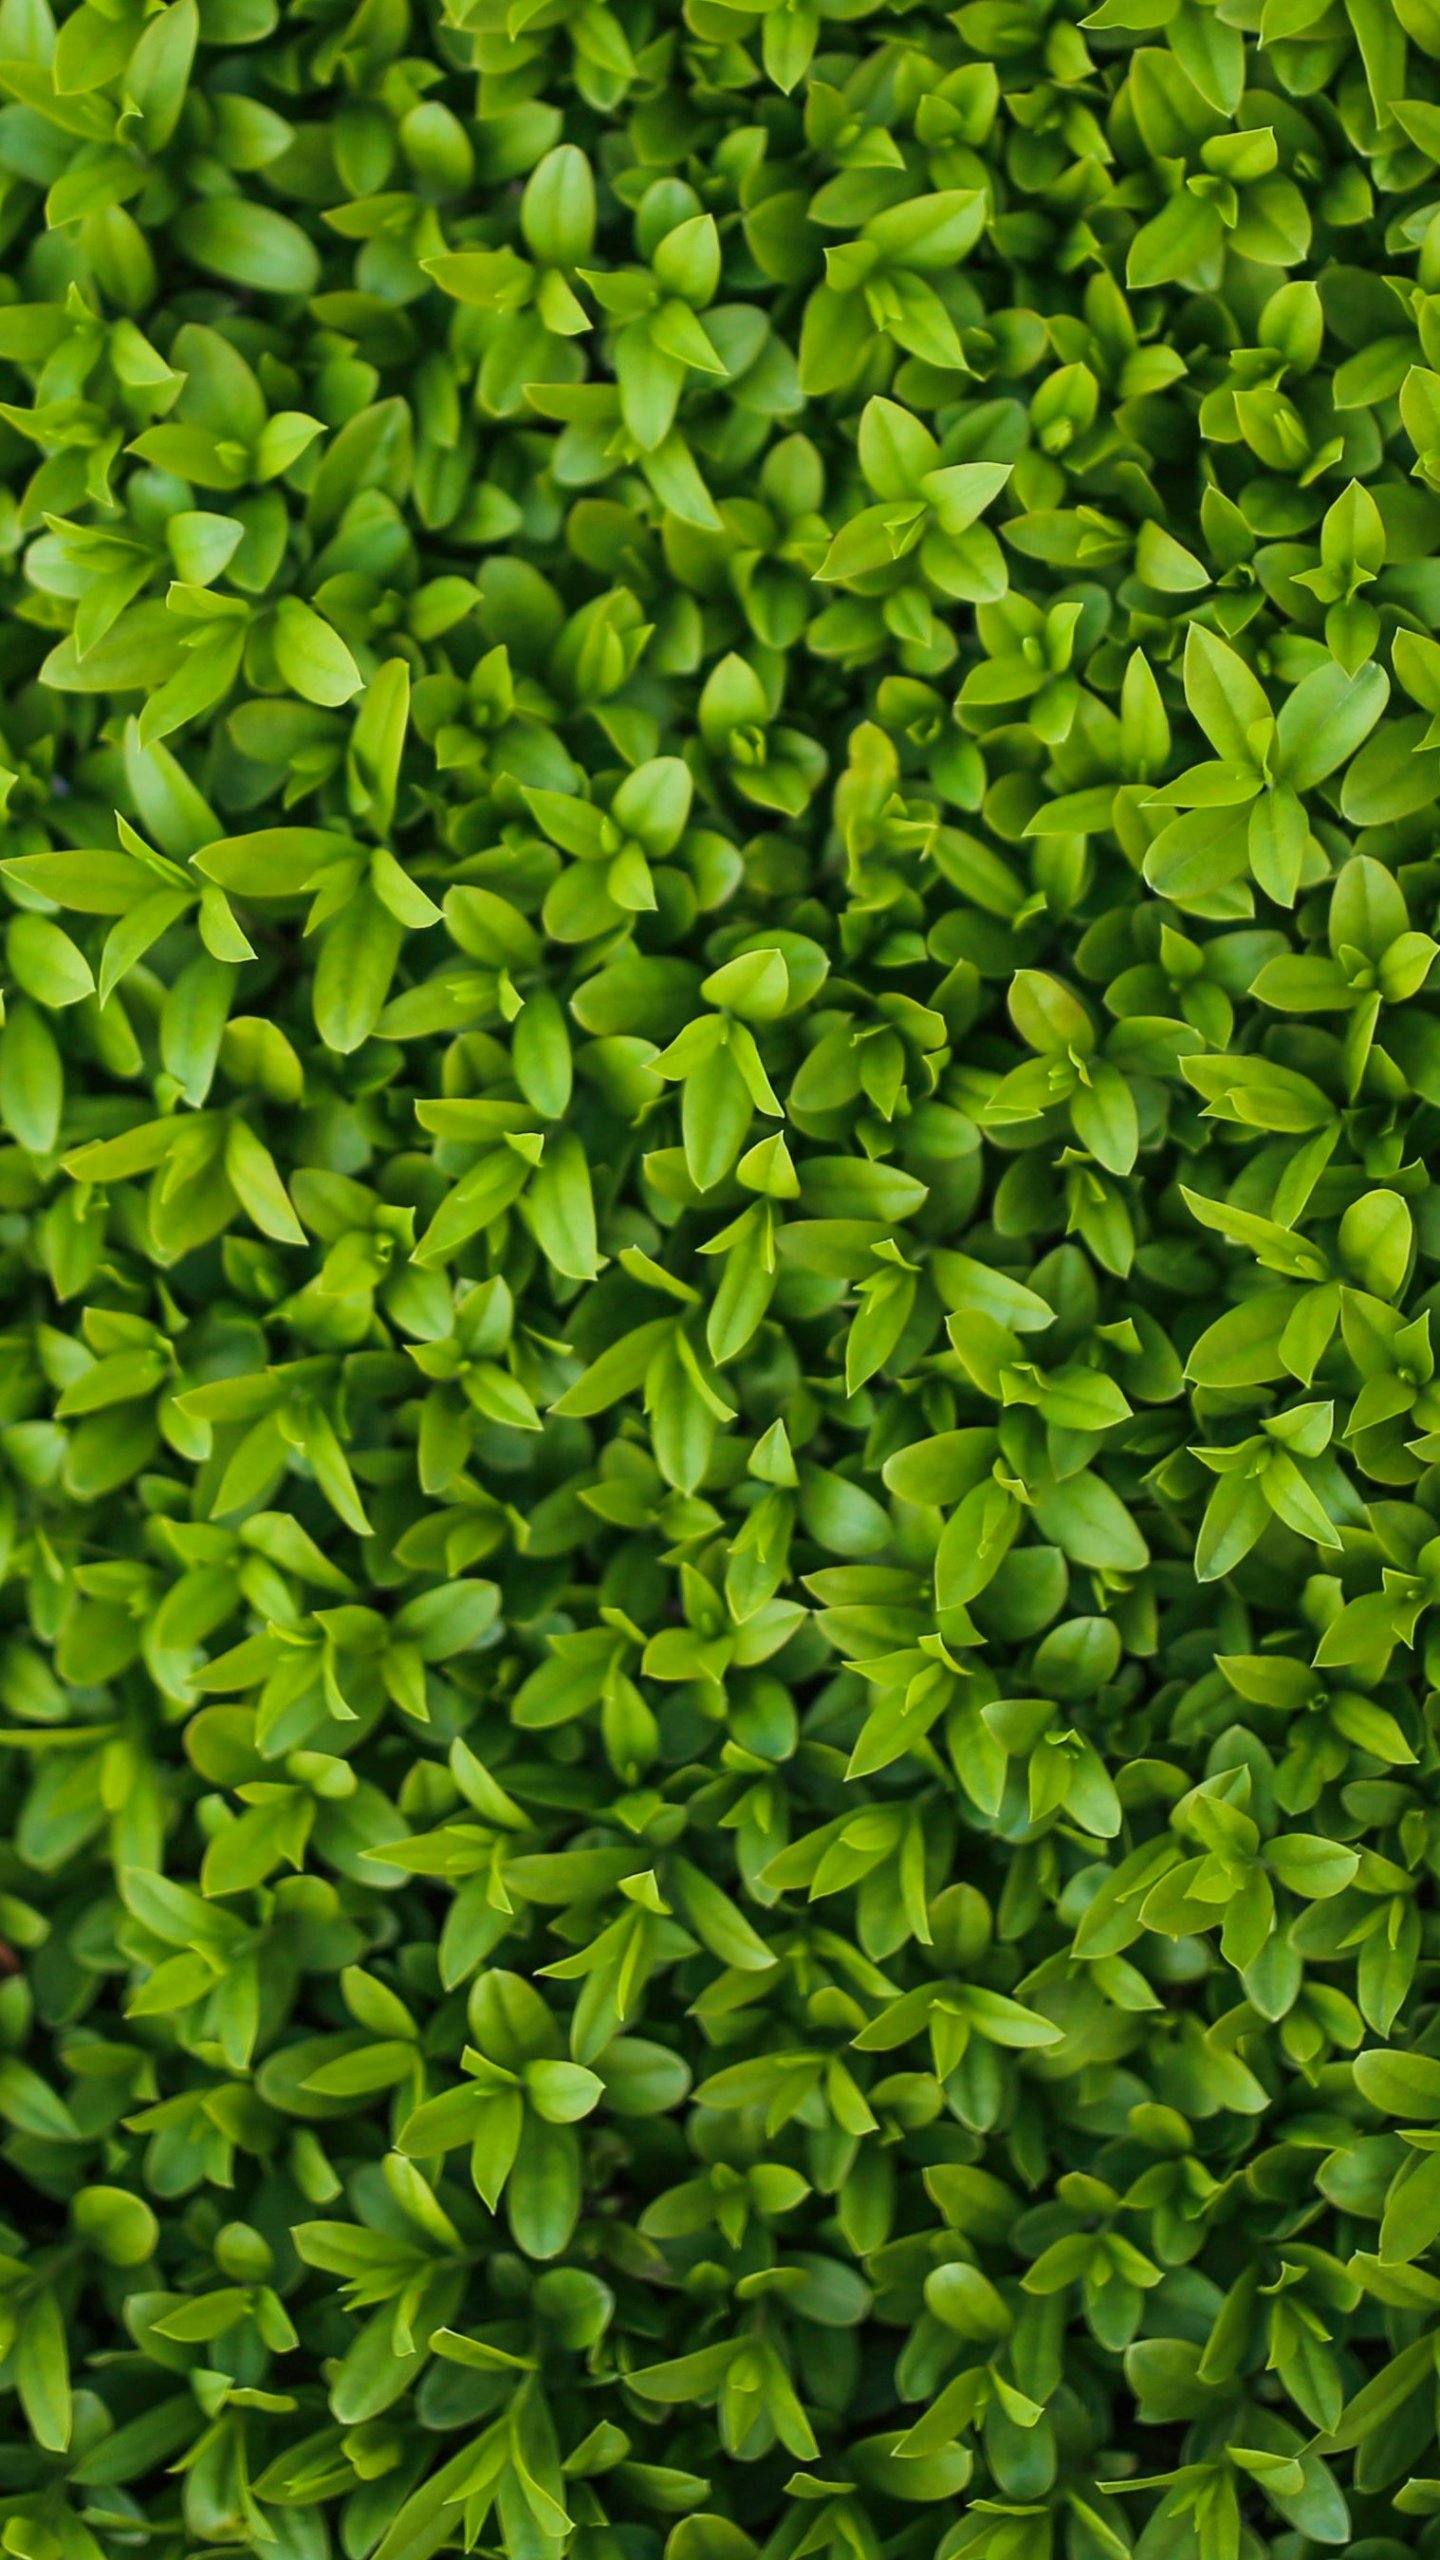 Tiny Leaves Texture Wallpaper - Mobile & Desktop Background